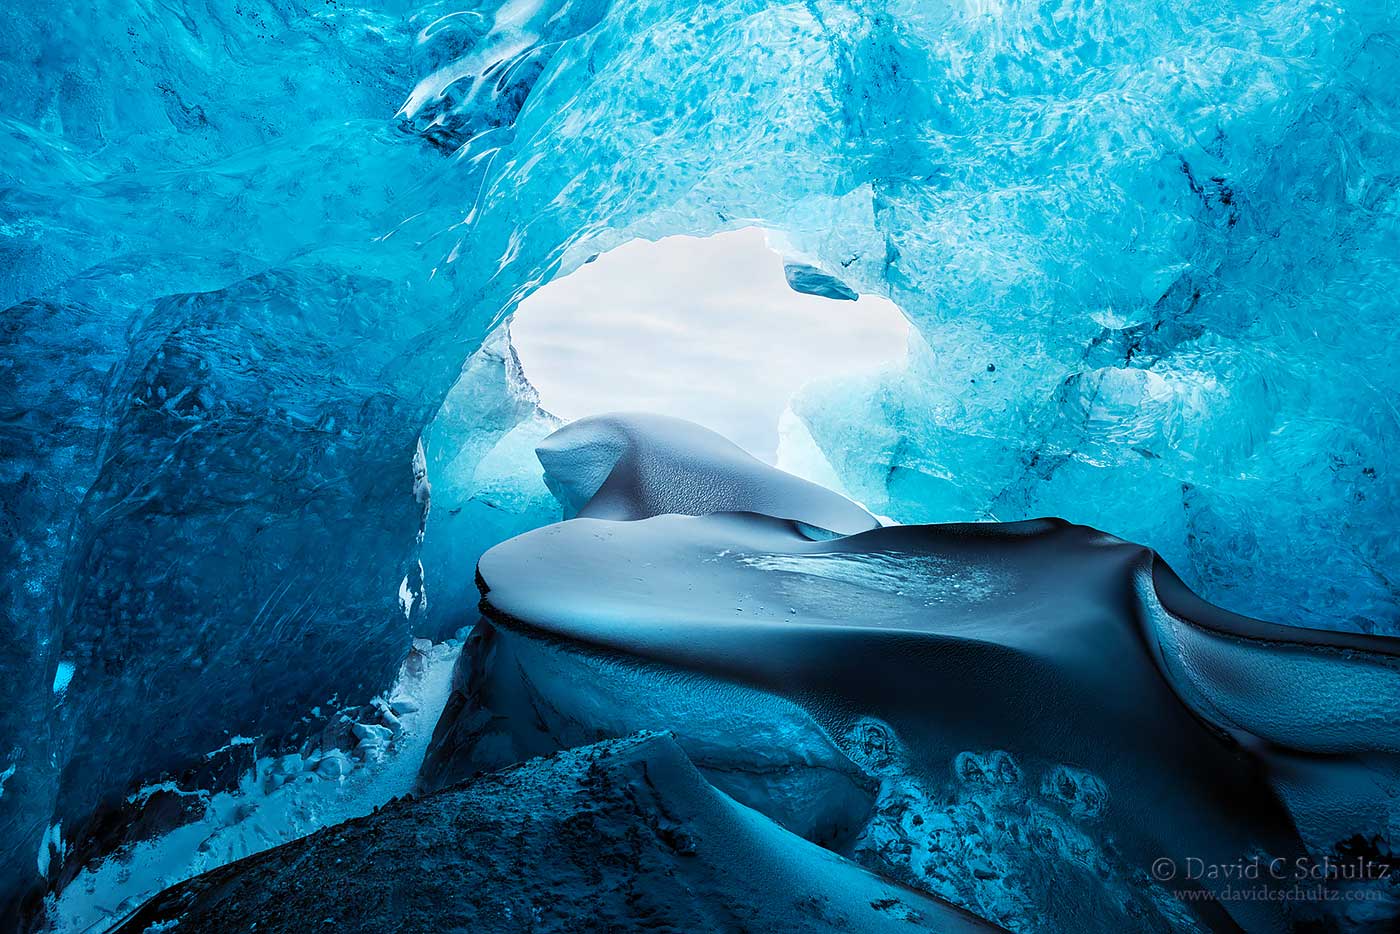 Iceland ice cave - Image #211-1500